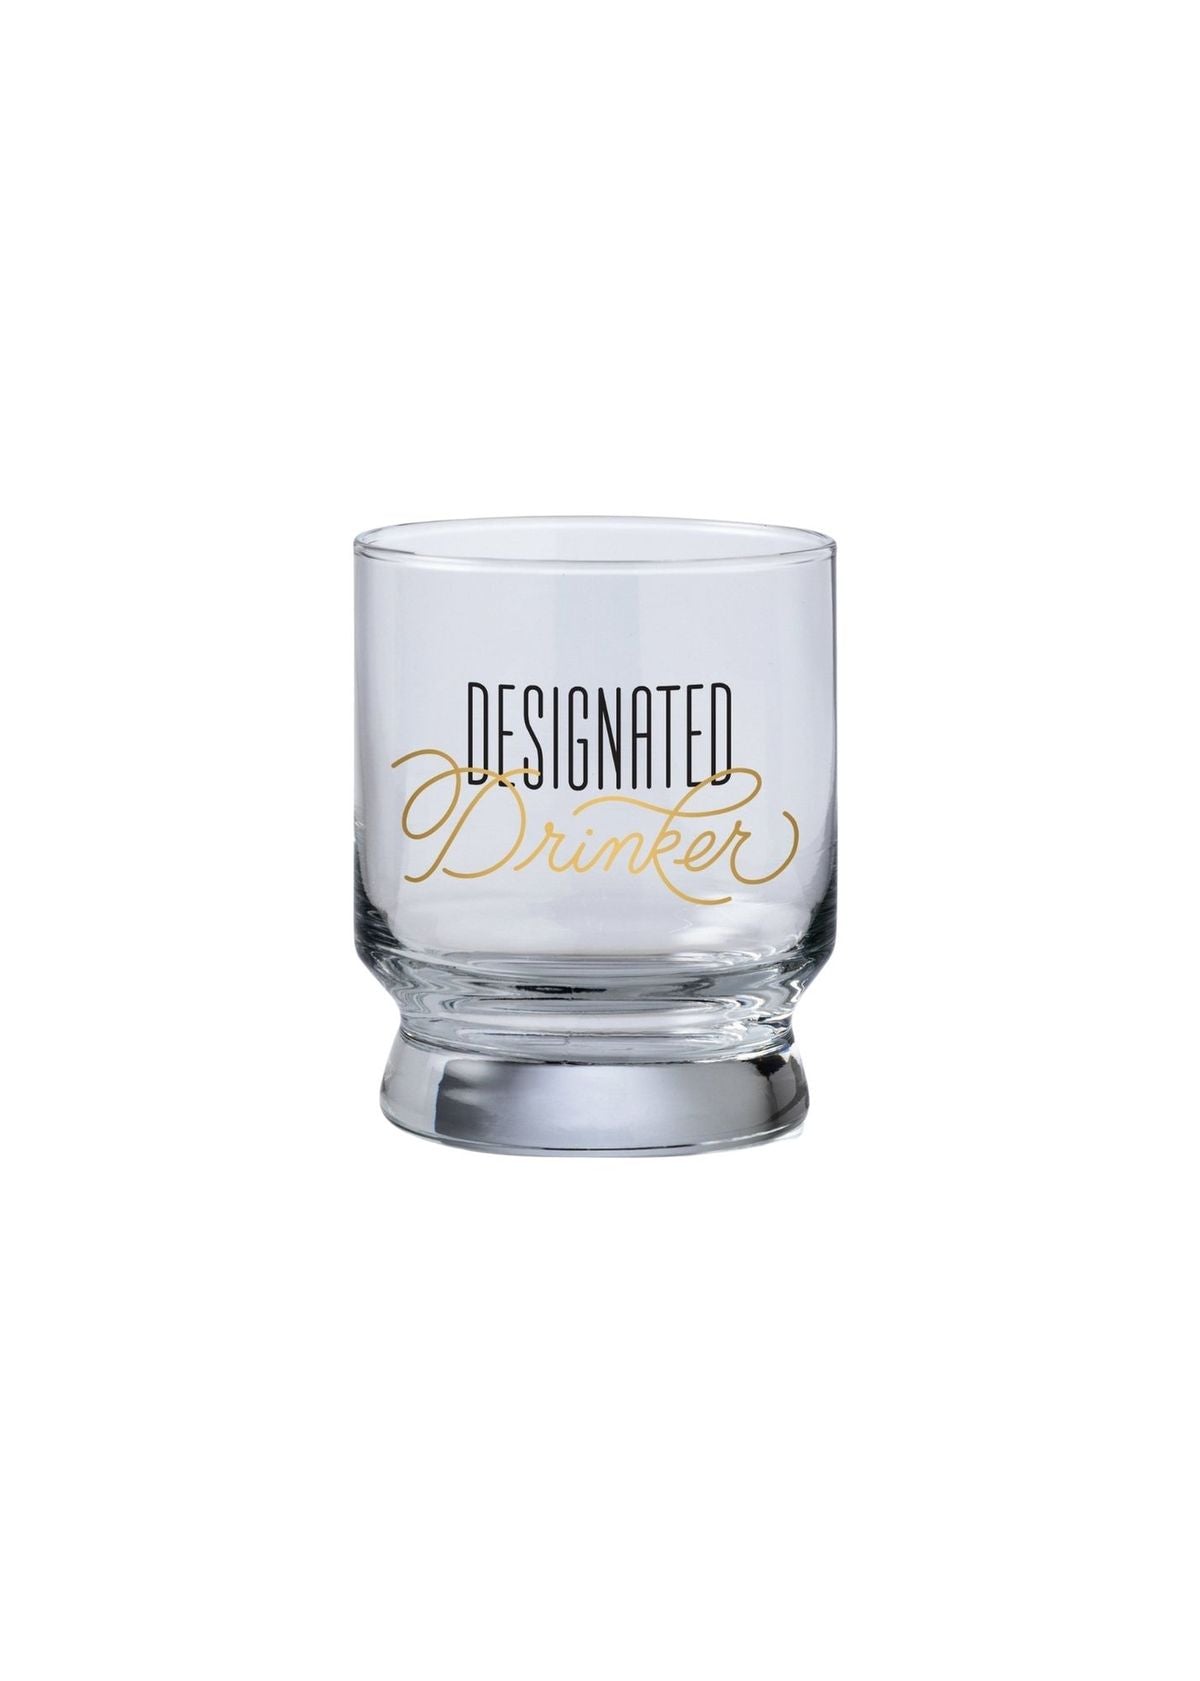 Lowball Glass | Distill My Heart, The Good Shit, Designated Drinker